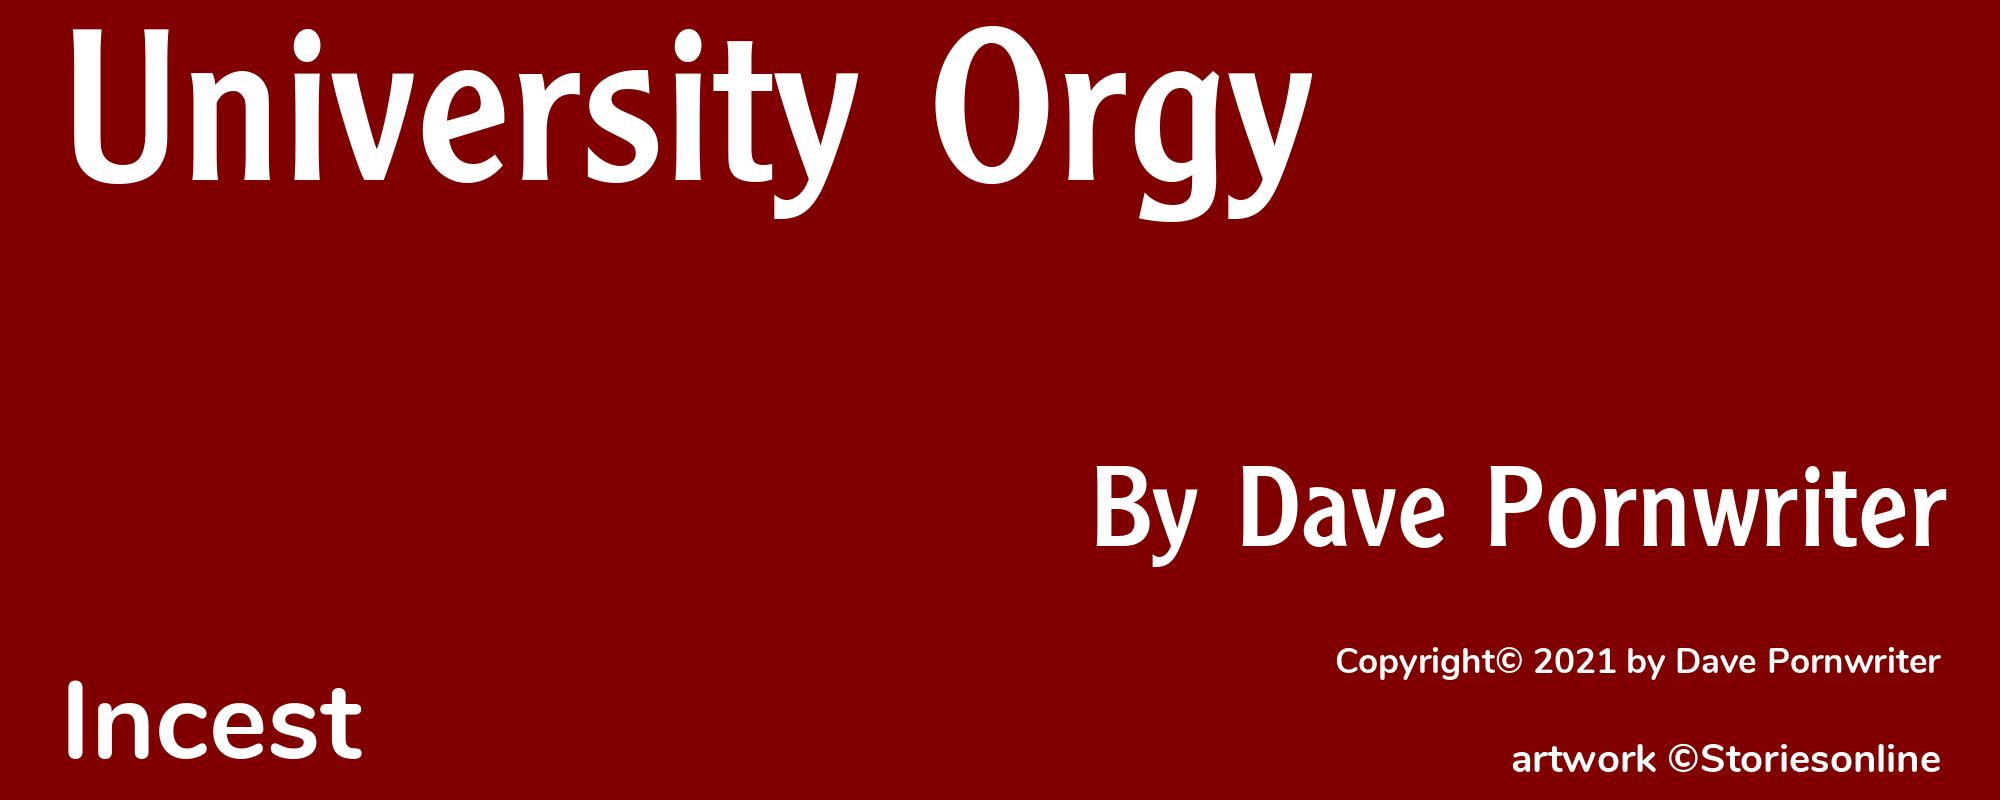 University Orgy - Cover